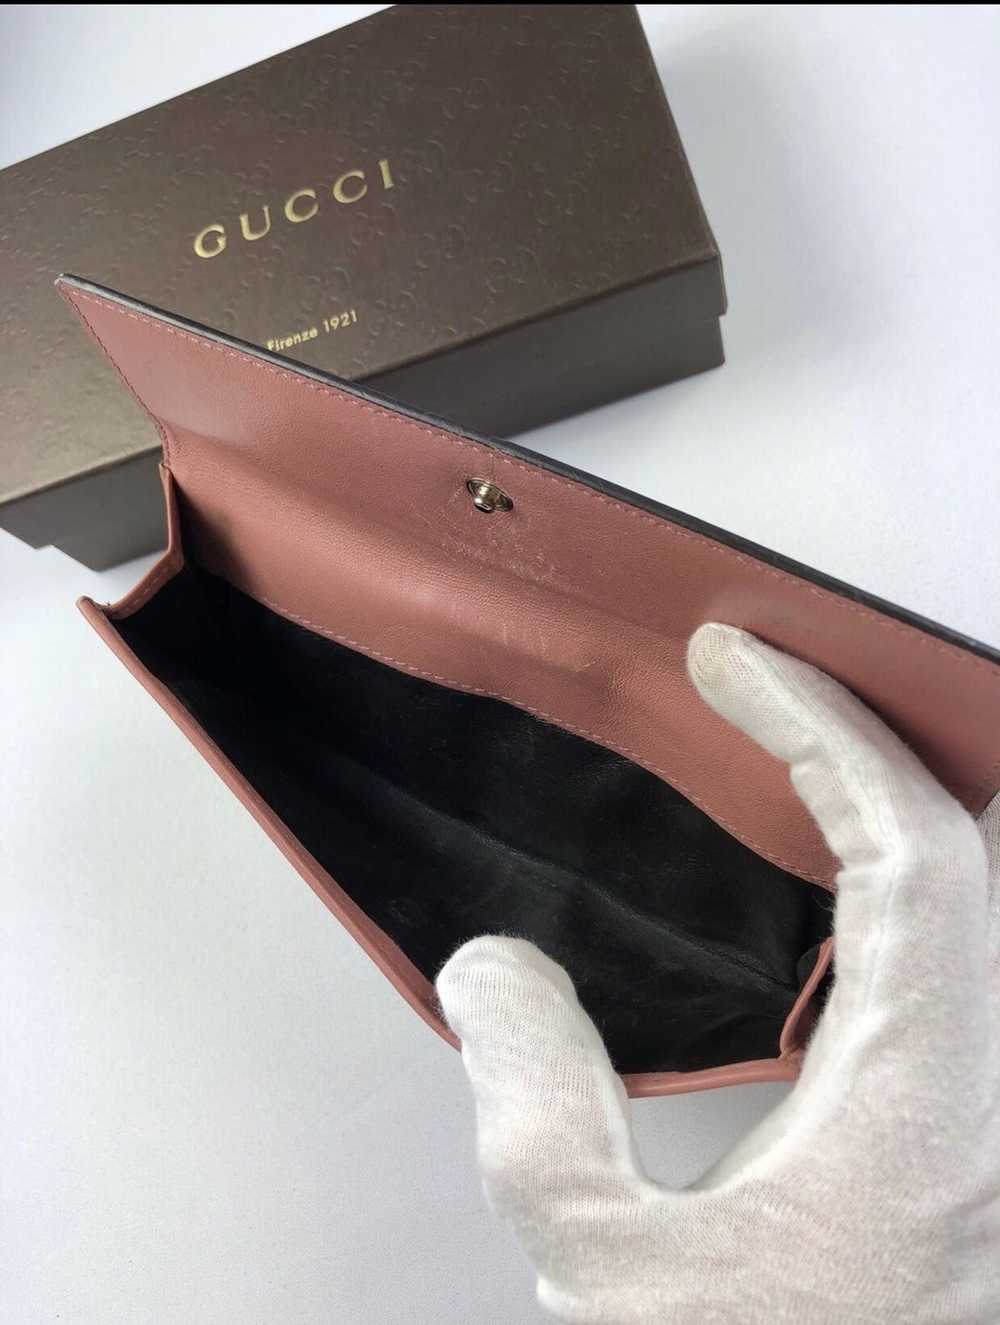 Gucci Gucci gg monogram canvas long wallet - image 9